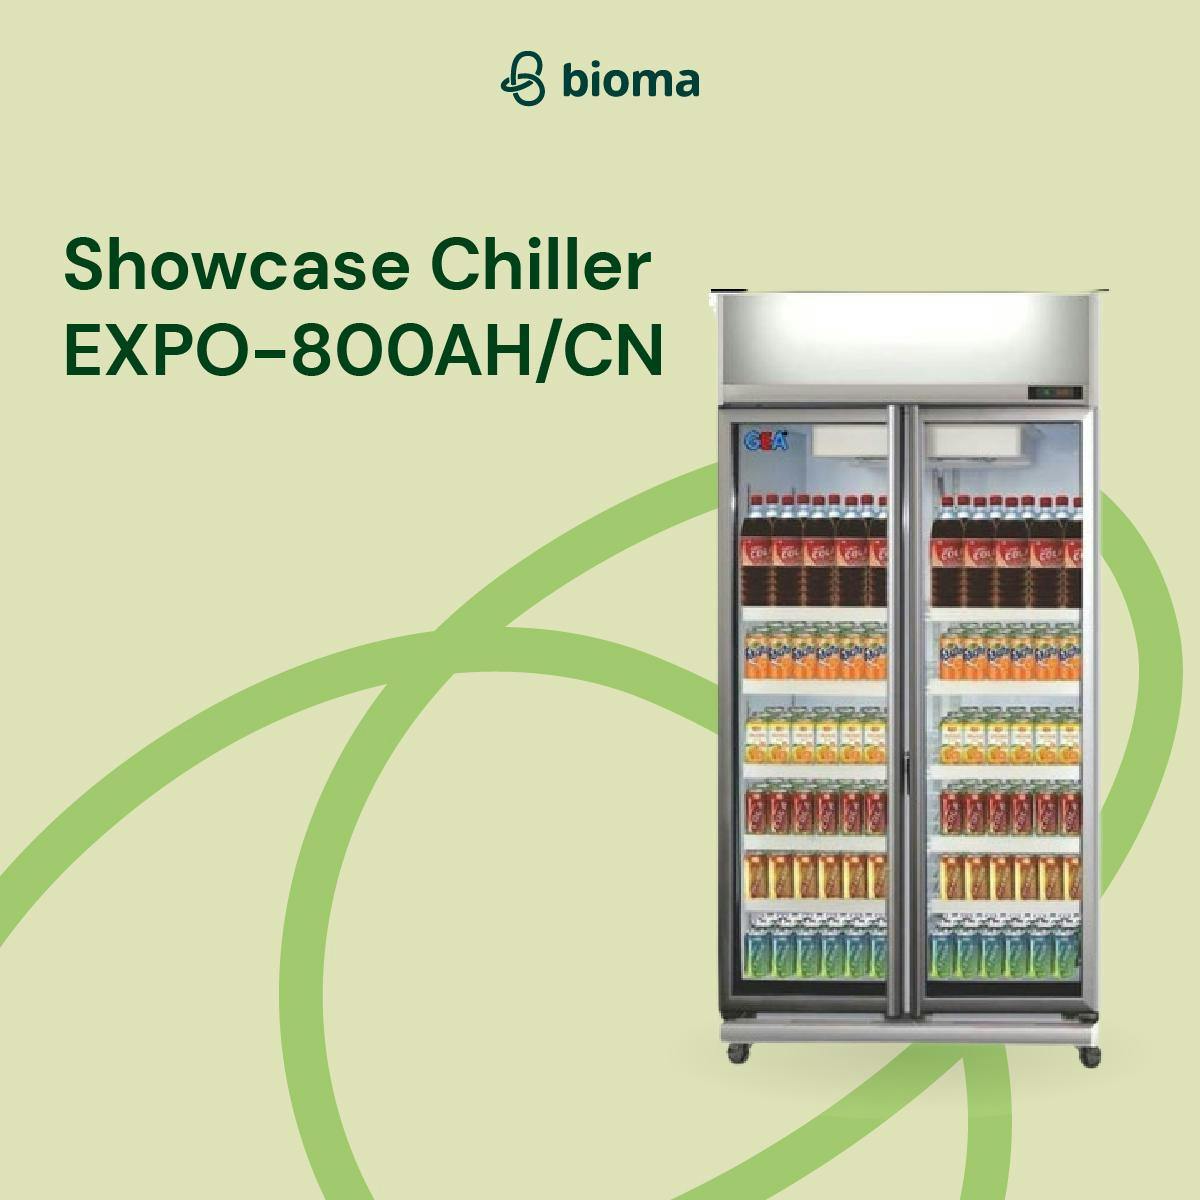 Showcase Chiller EXPO-800AH/CN